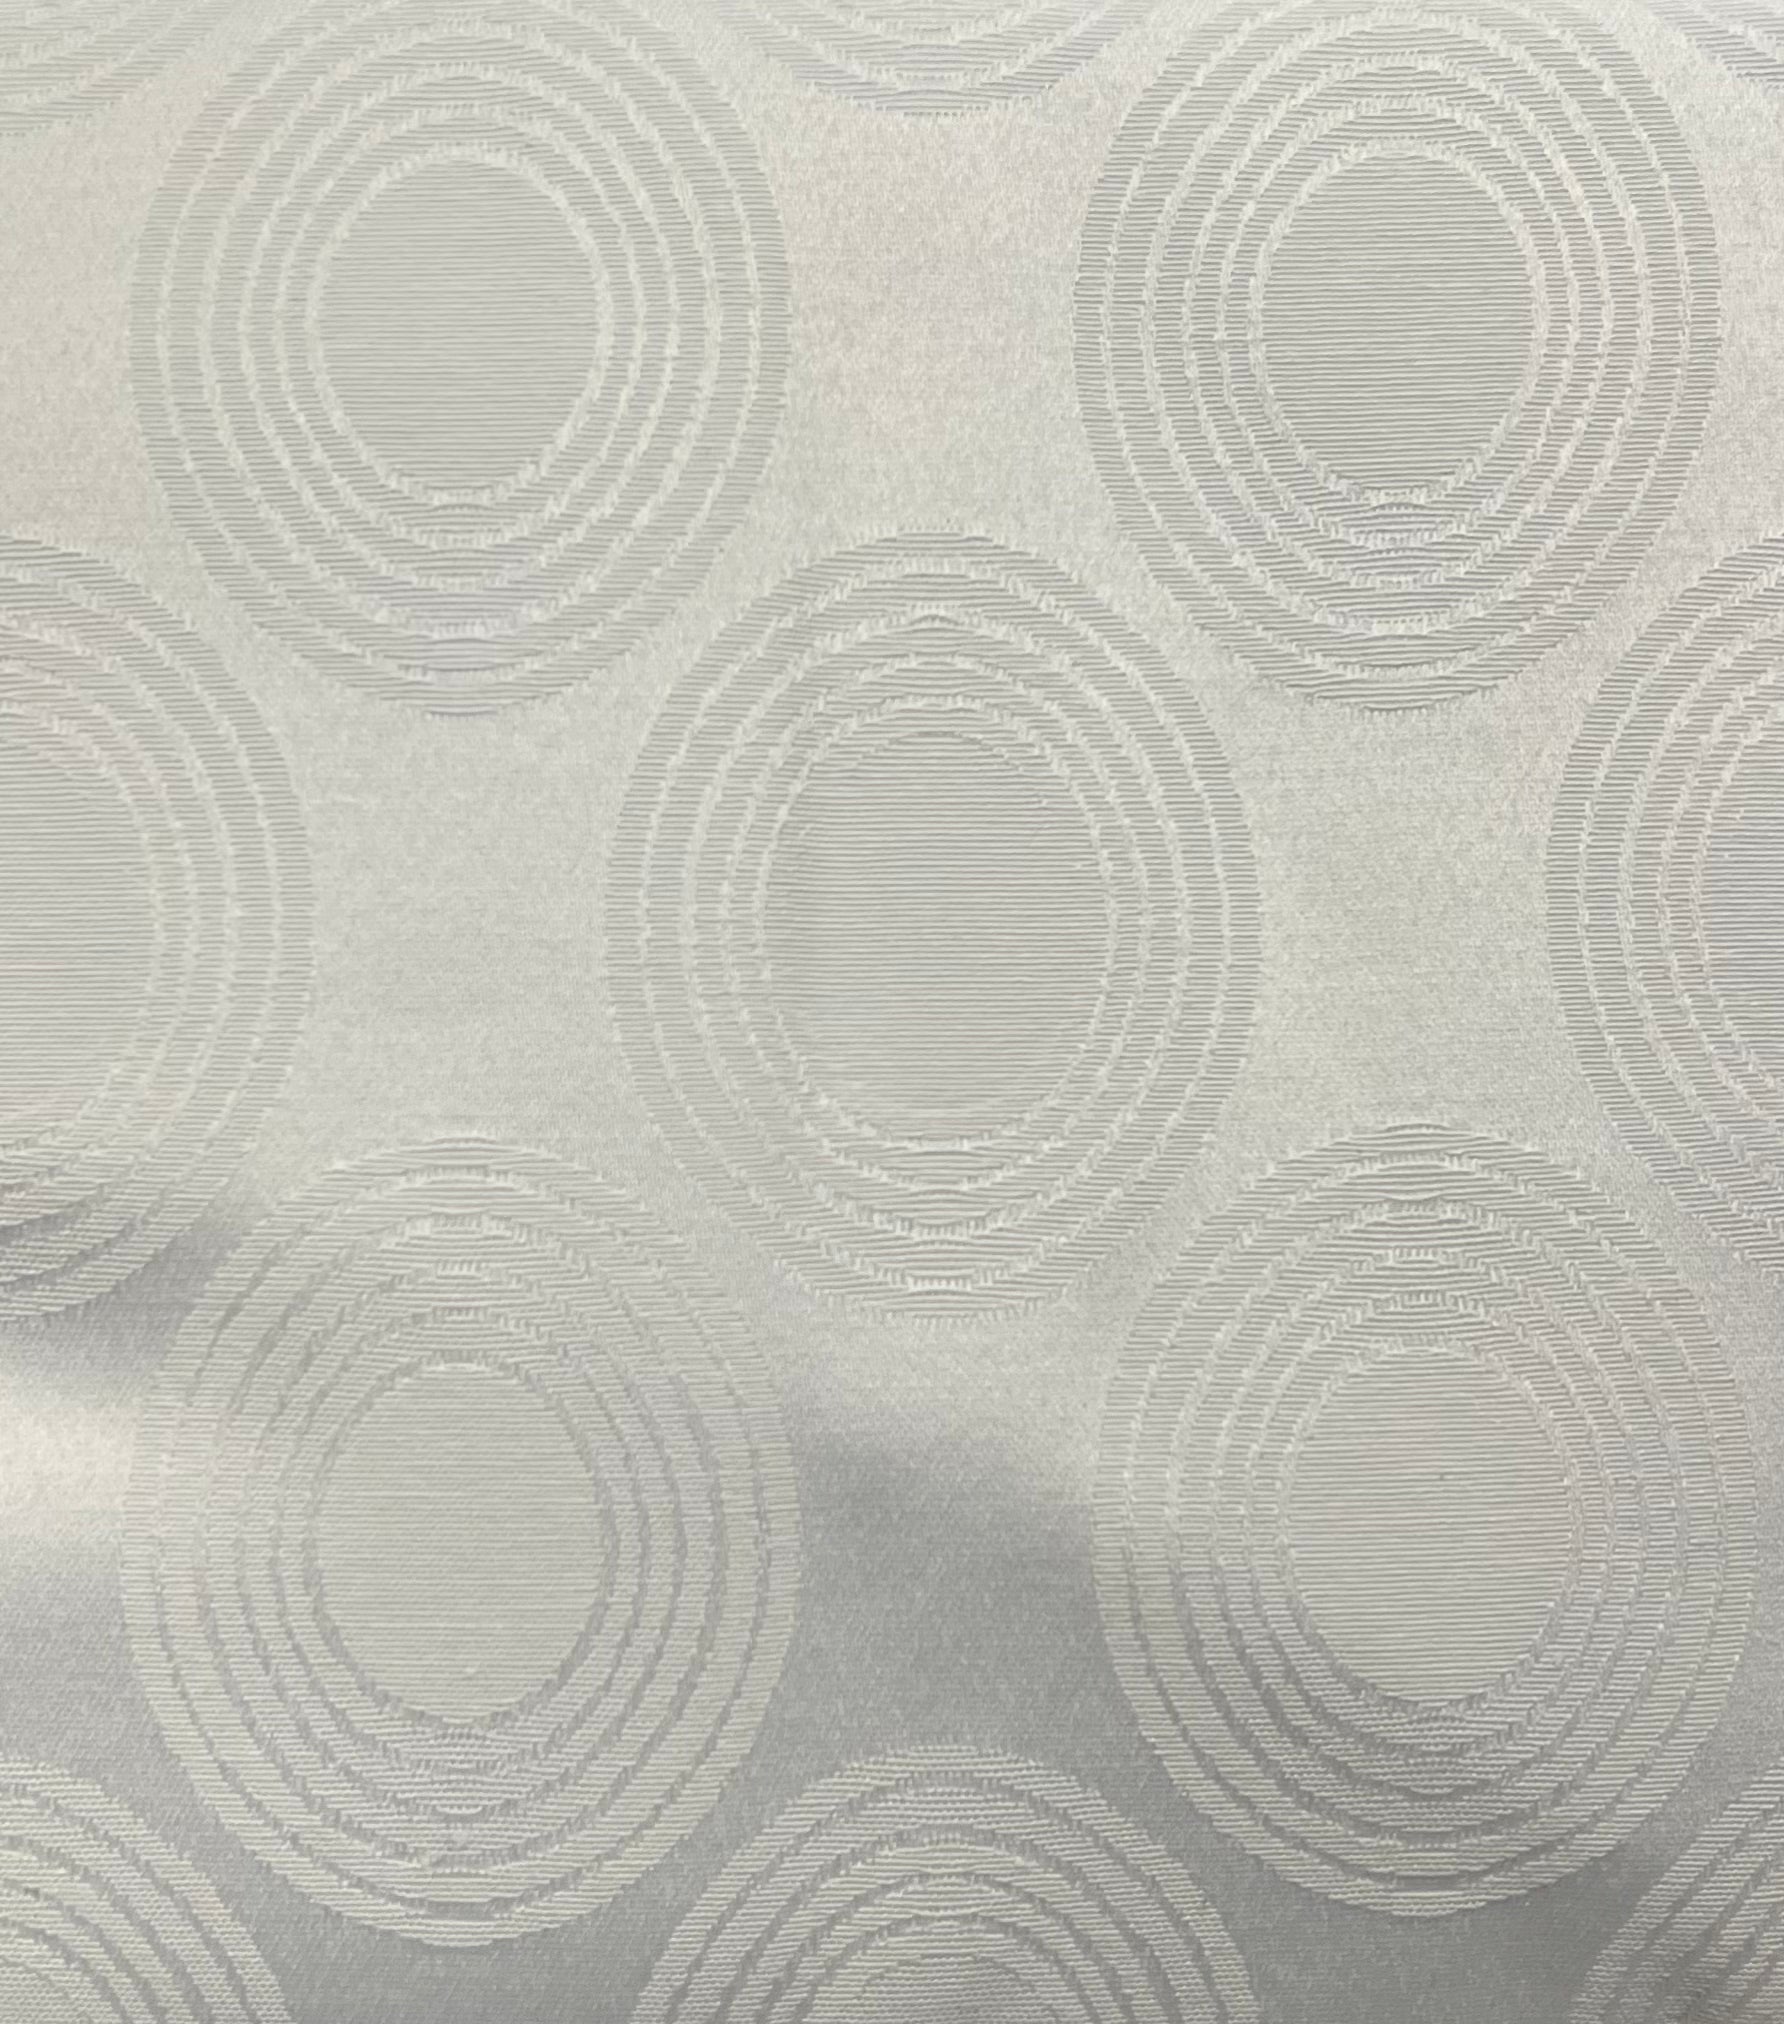 Table Cloth -Circles -White